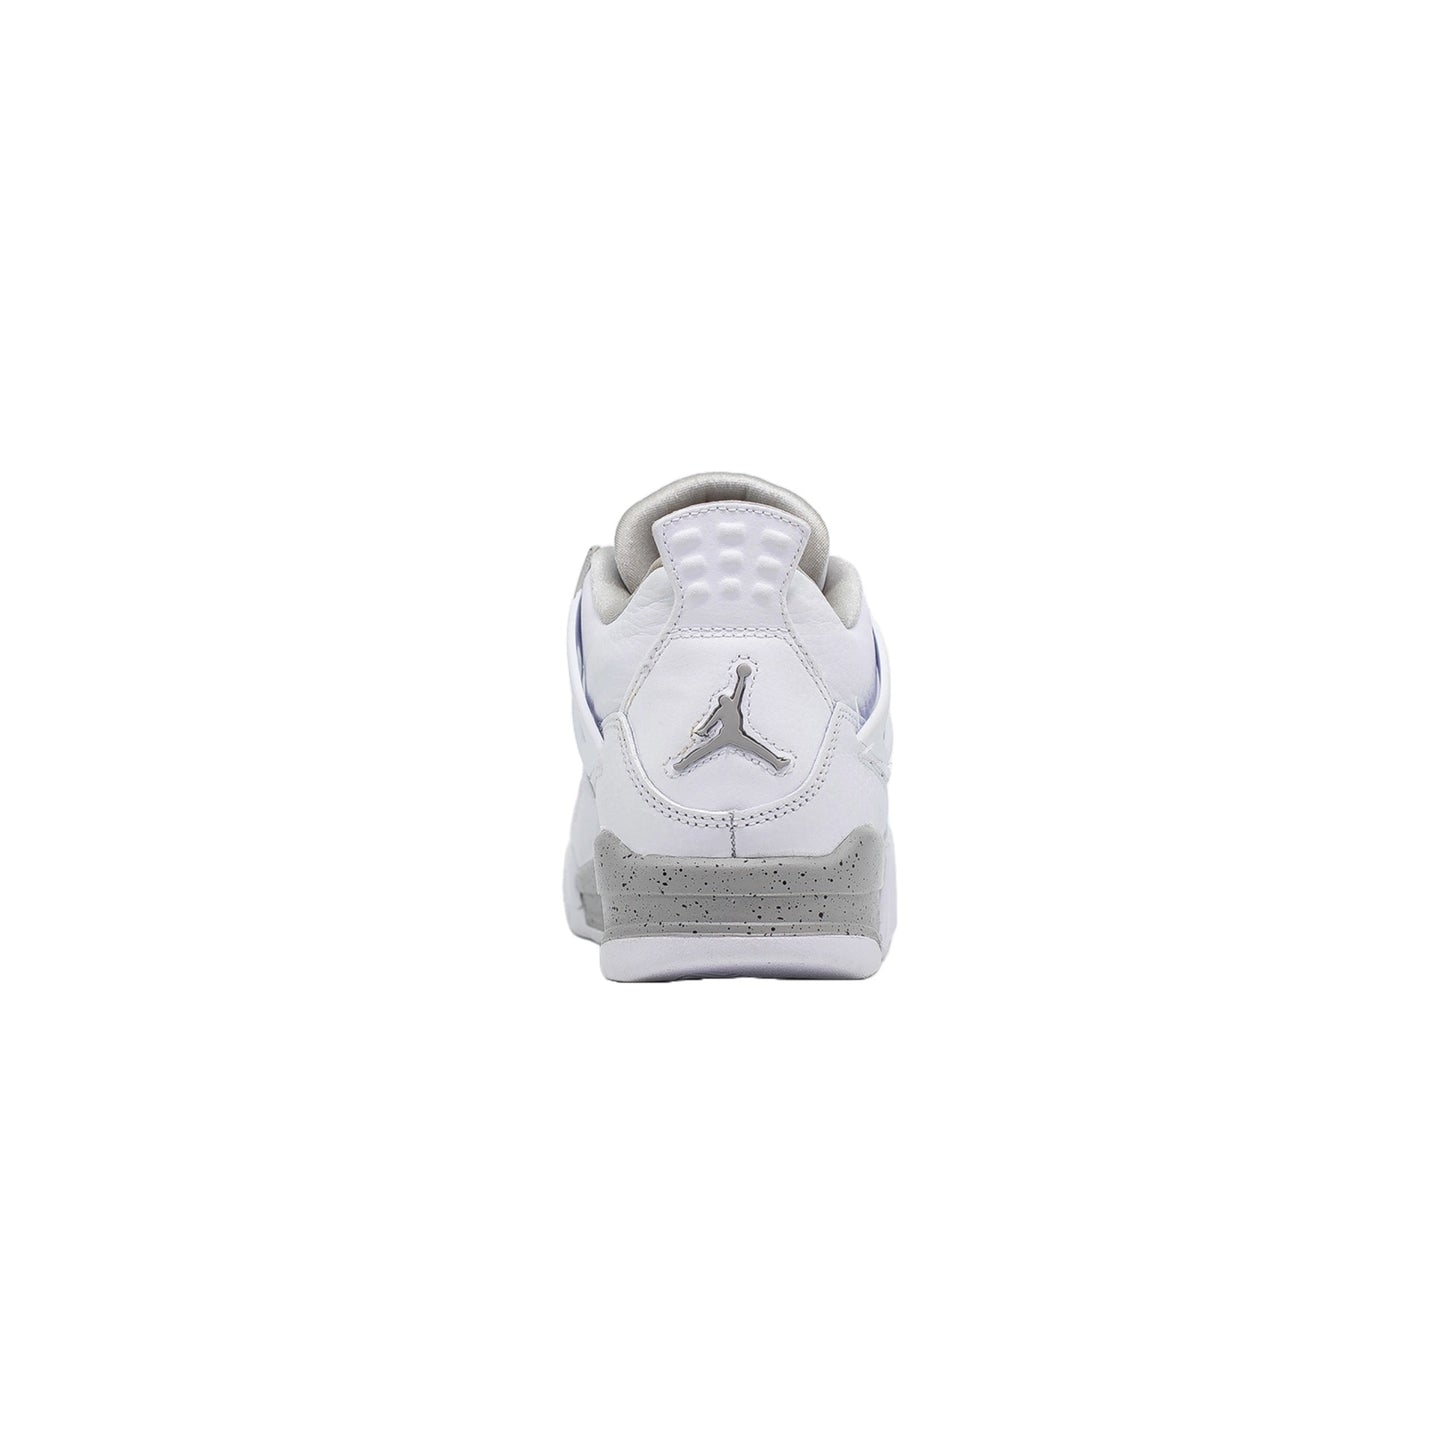 Air Jordan 4, White Oreo